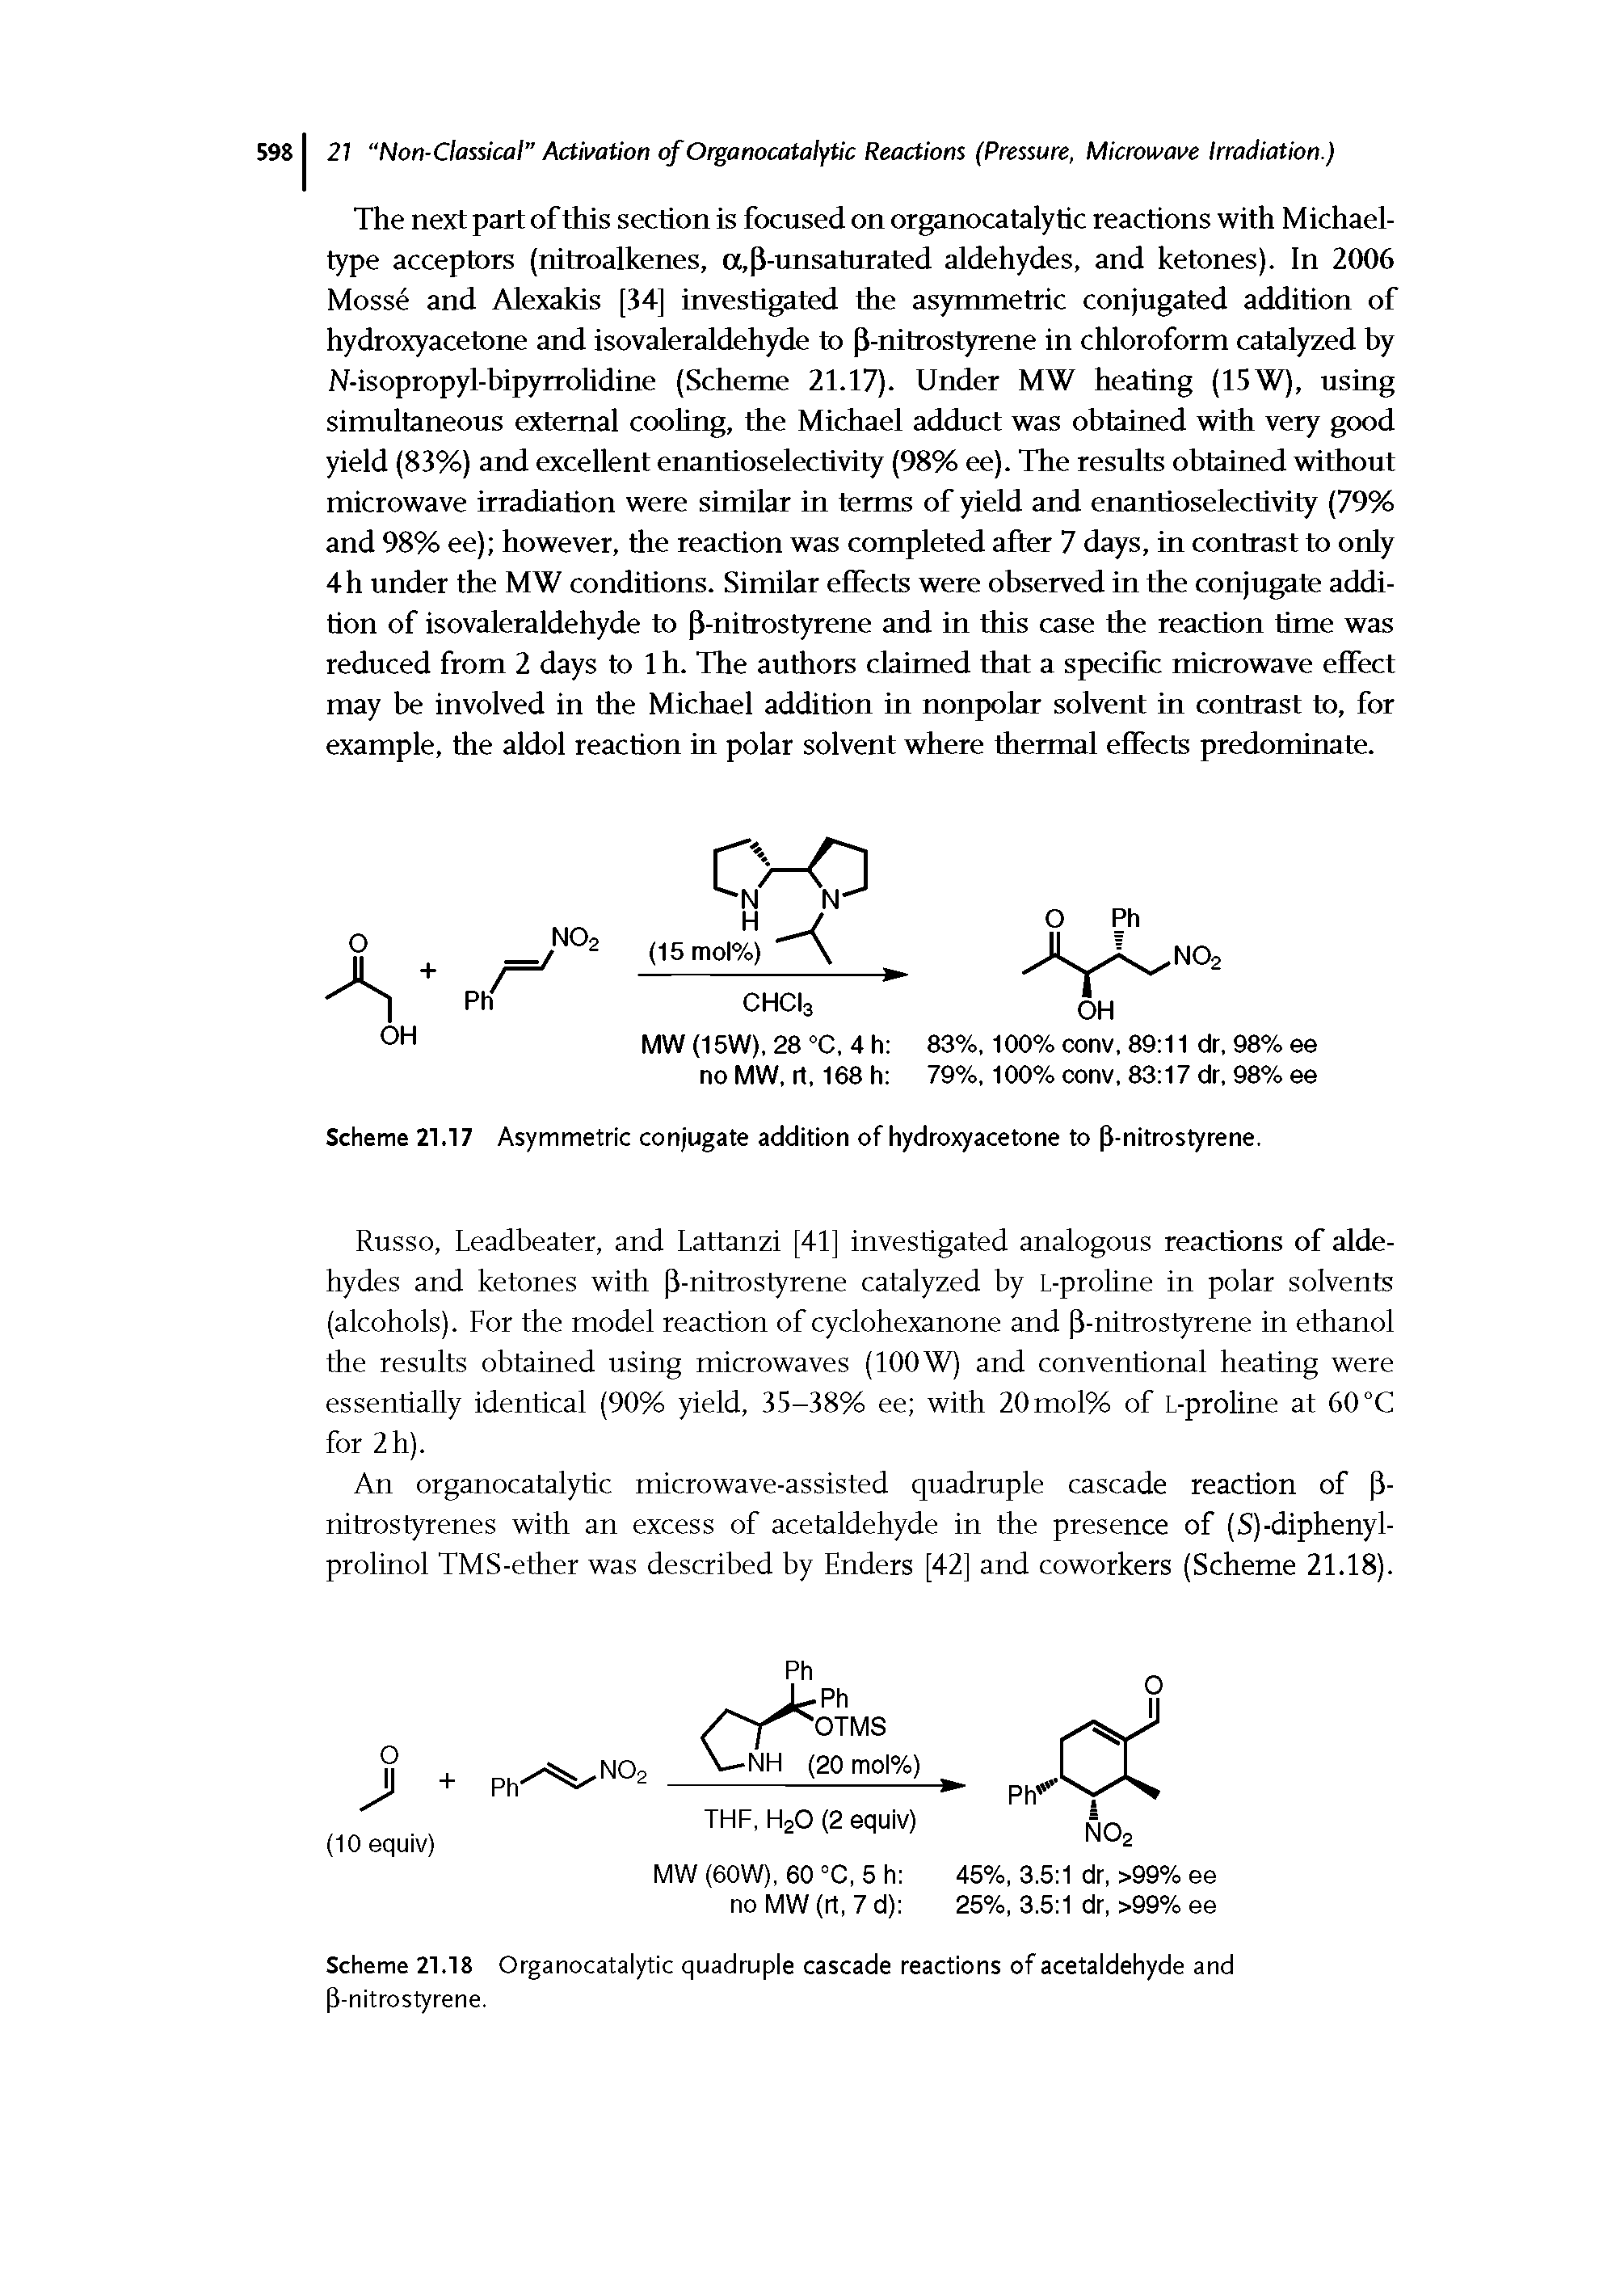 Scheme 21,18 Organocatalytic quadruple cascade reactions of acetaldehyde and P-nitrostyrene.